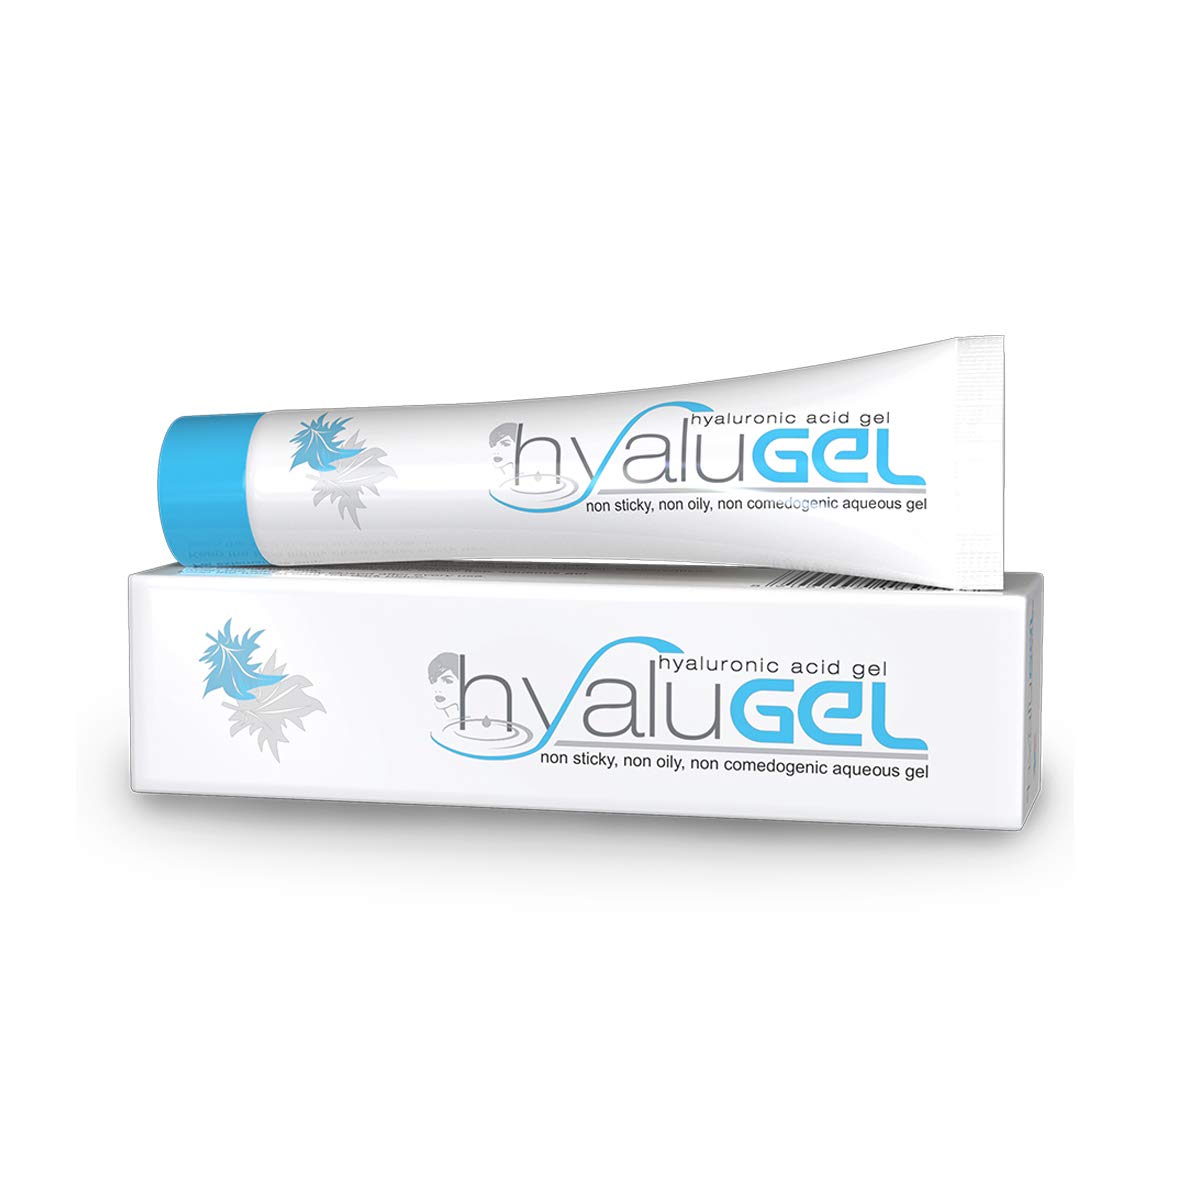 hyalugel acid gel non sticky non oily